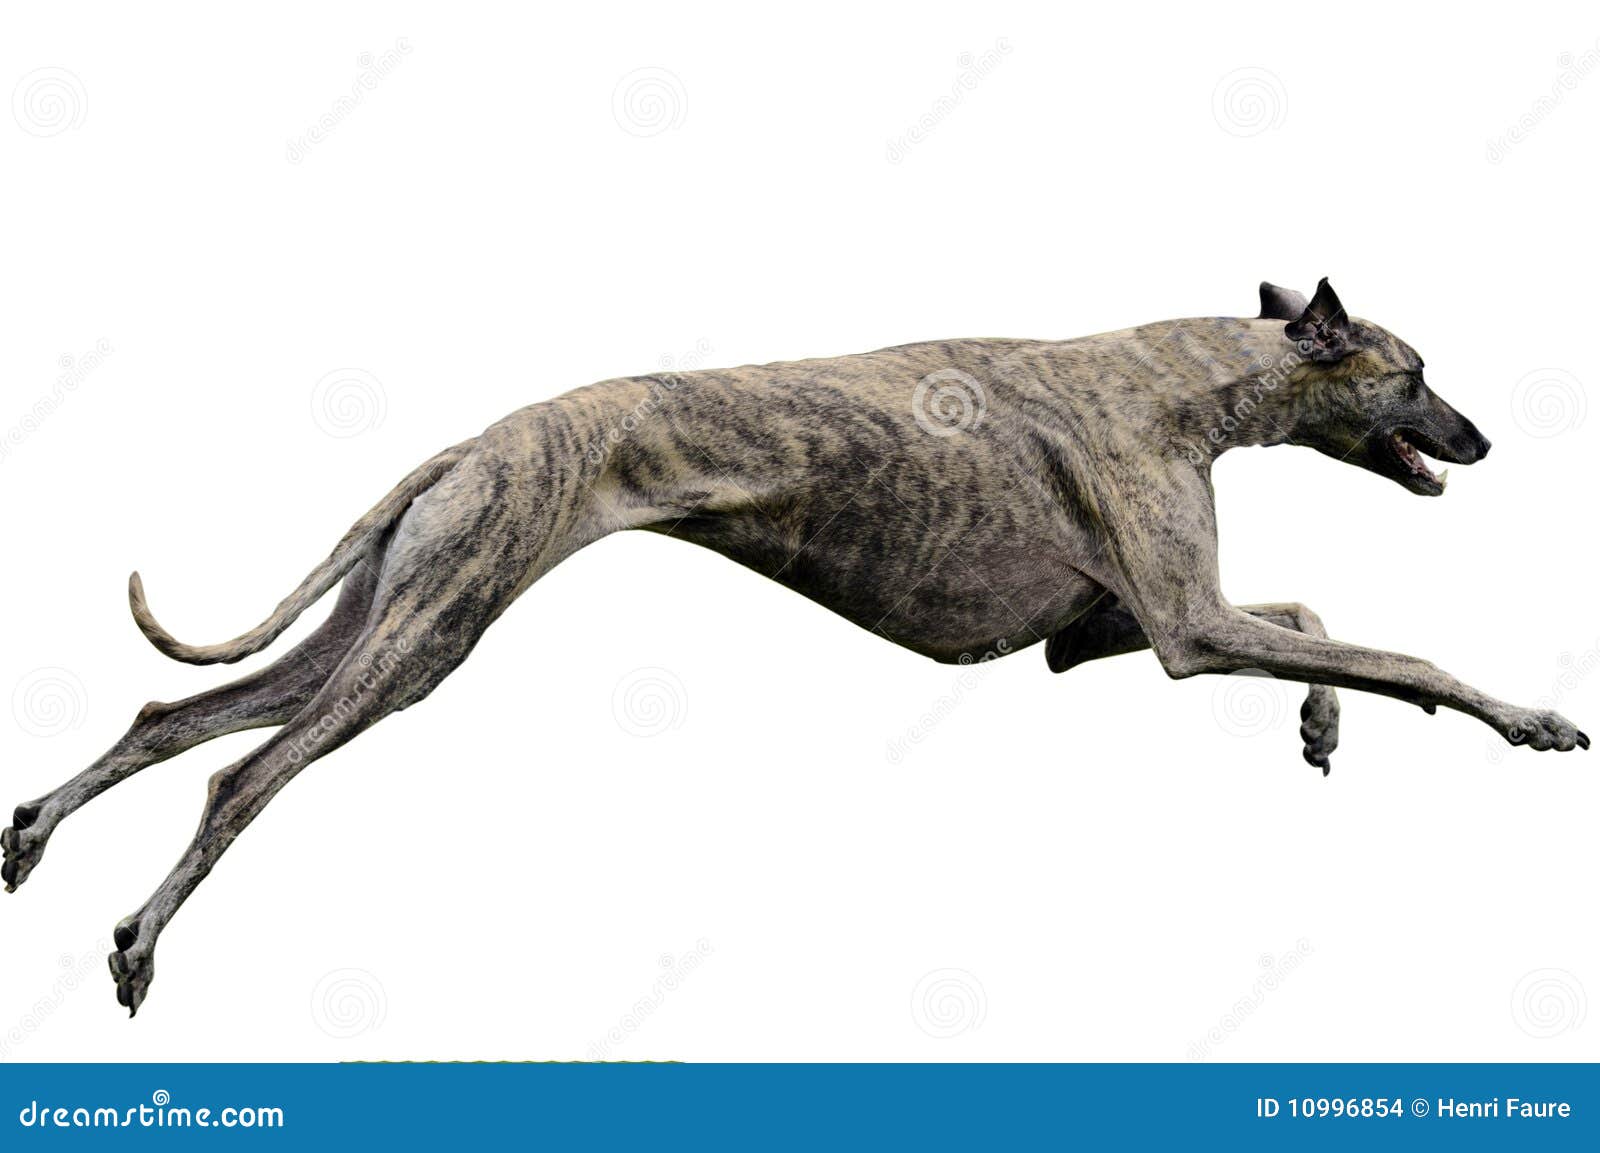 Greyhound Crossroads - Lure Coursing